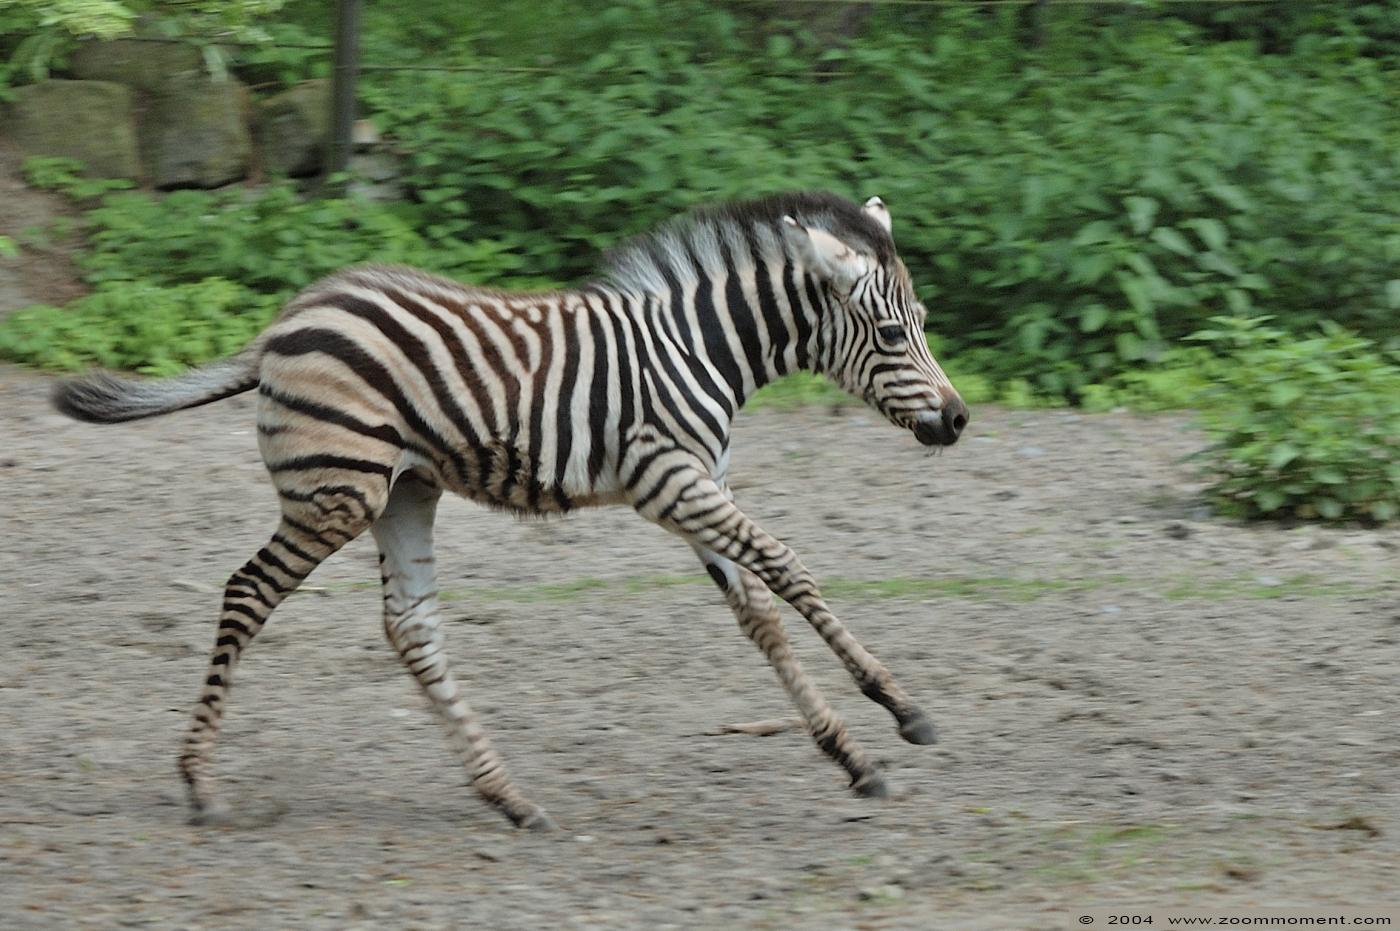 Chapman zebra  ( Equus quagga chapmani )
Keywords: Naturzoo Rheine Germany Equus quagga chapmani Chapman zebra